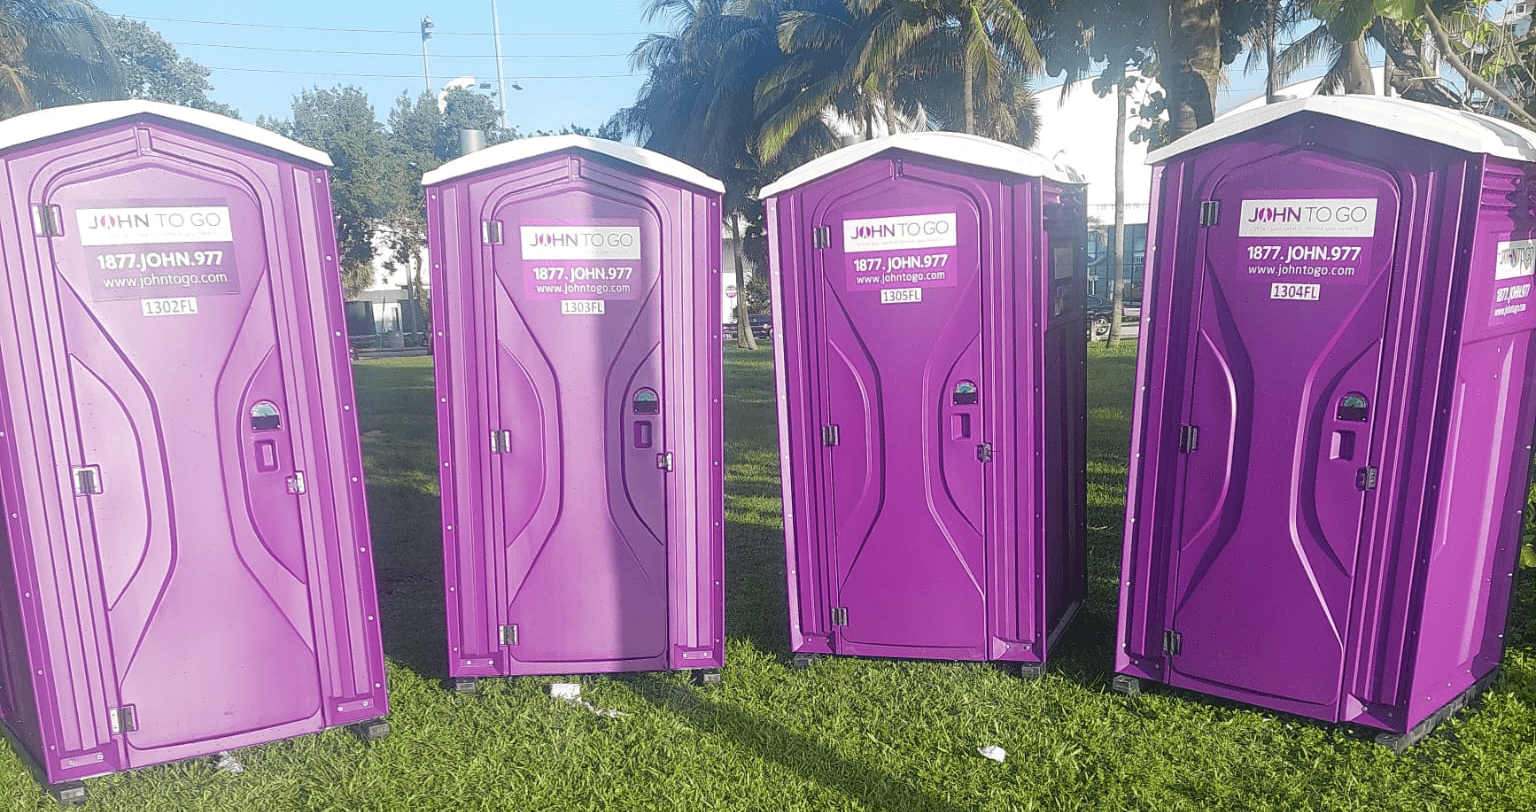 festival portable toilets on grass